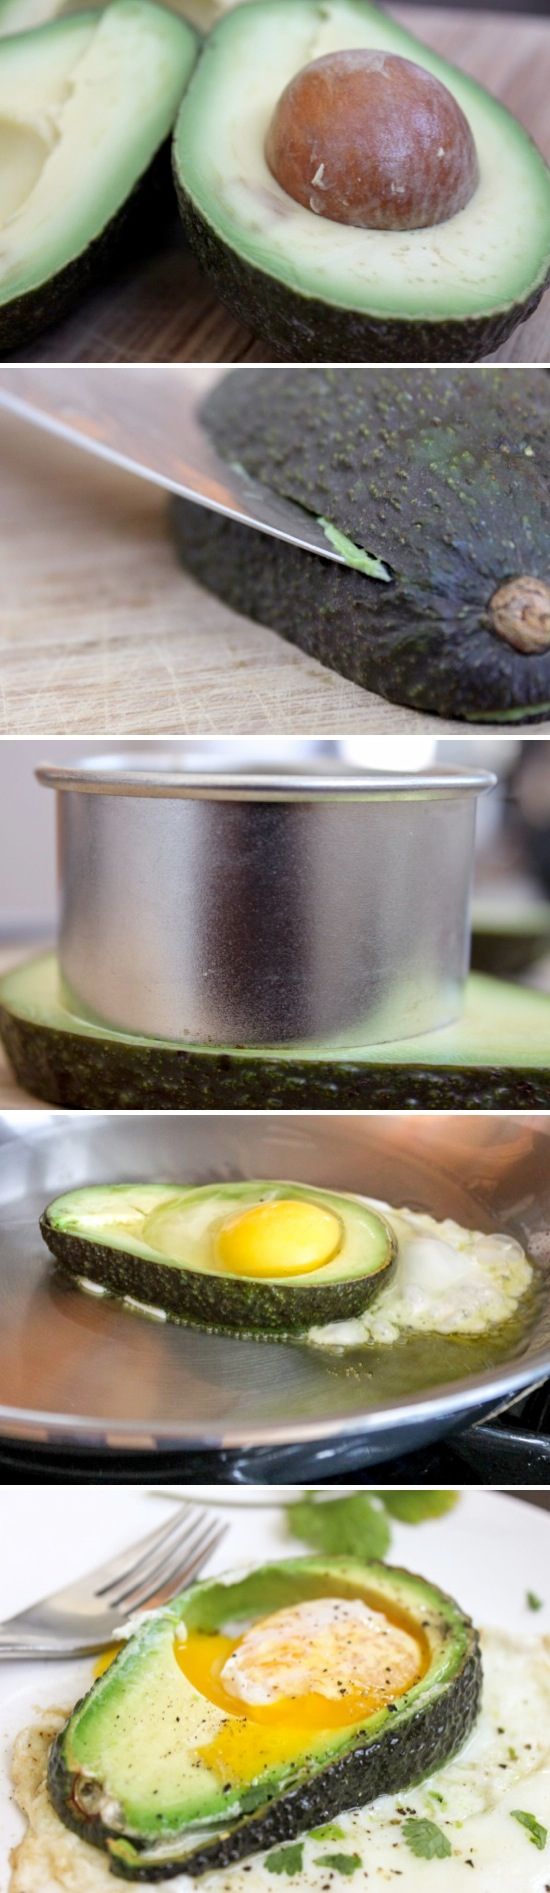 Jajko z awokado 